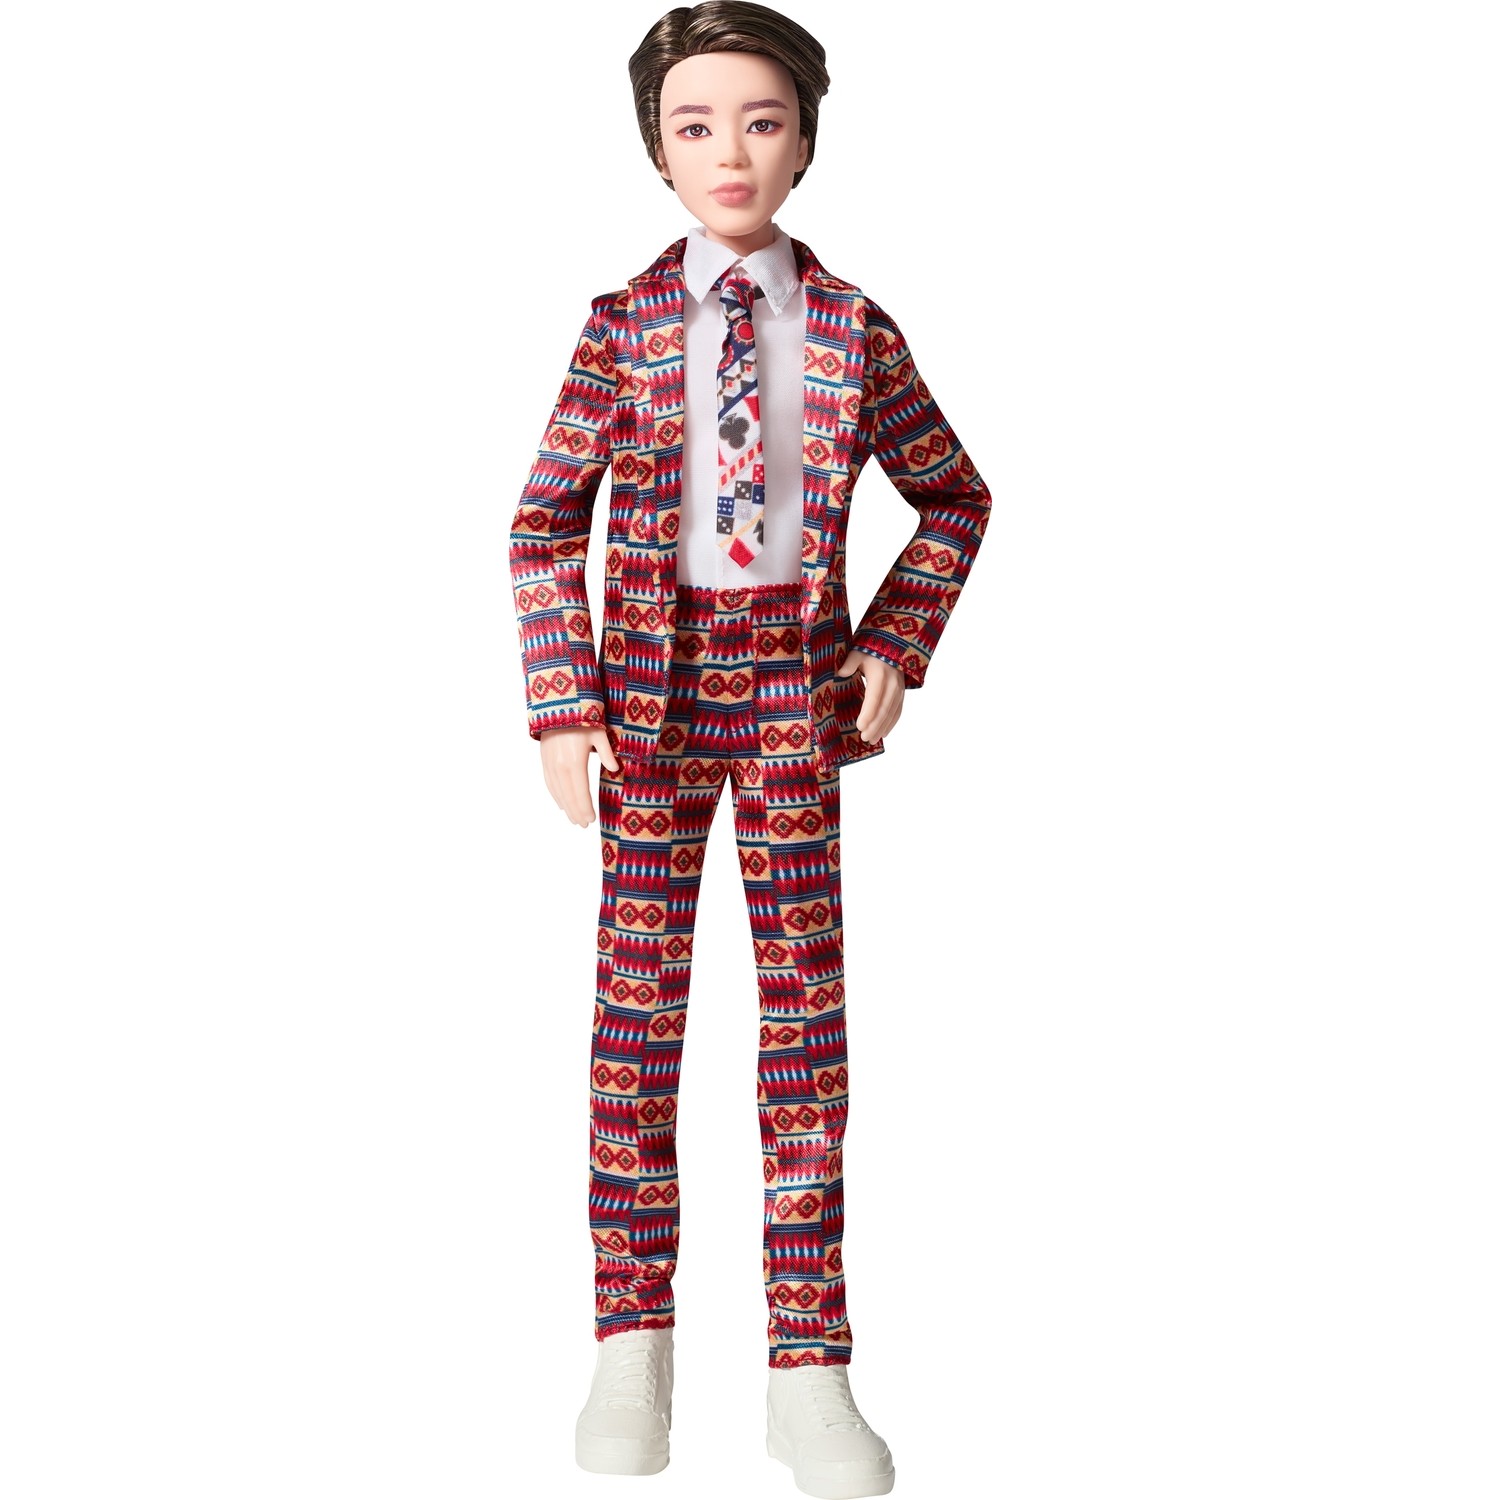 Кукла Jimin Fashion Doll певец из группы BTS кукла mattel bts v 29 см gkc89 красный